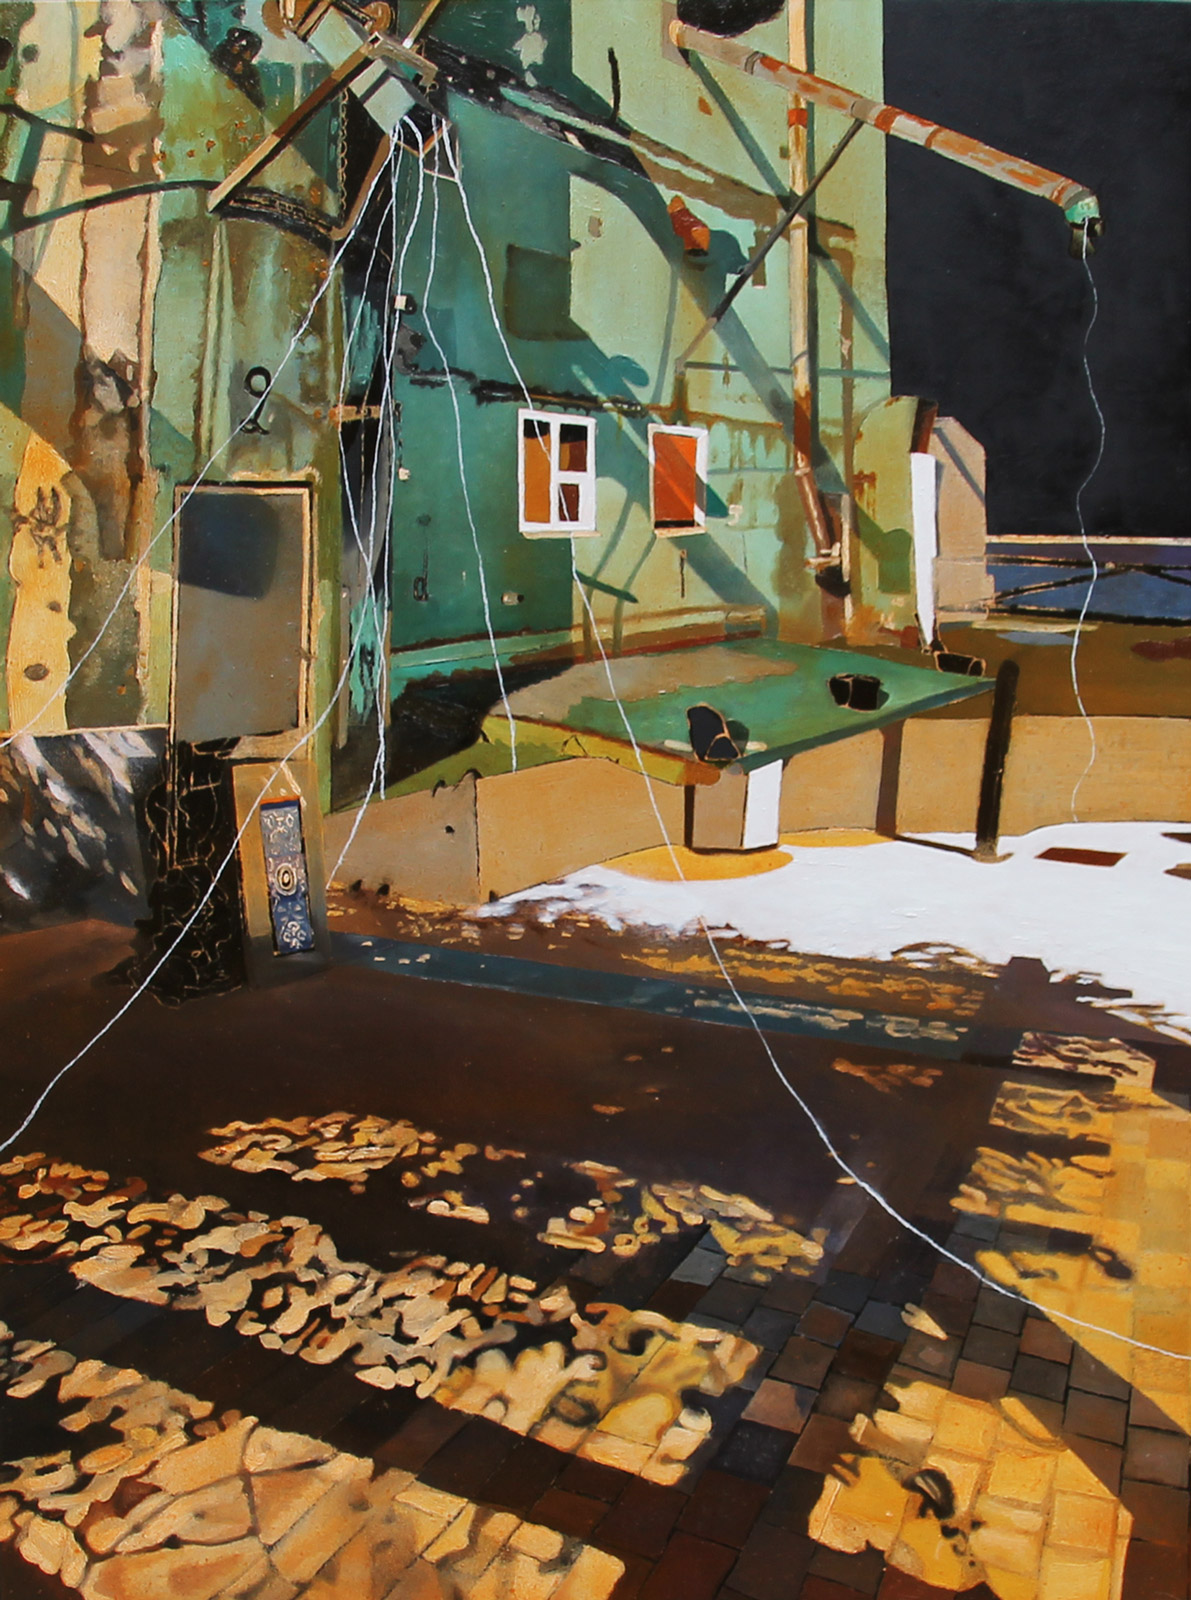 Lisa D Manner, "Sidewide", 2016, oil on panel, 40 x 30 cm